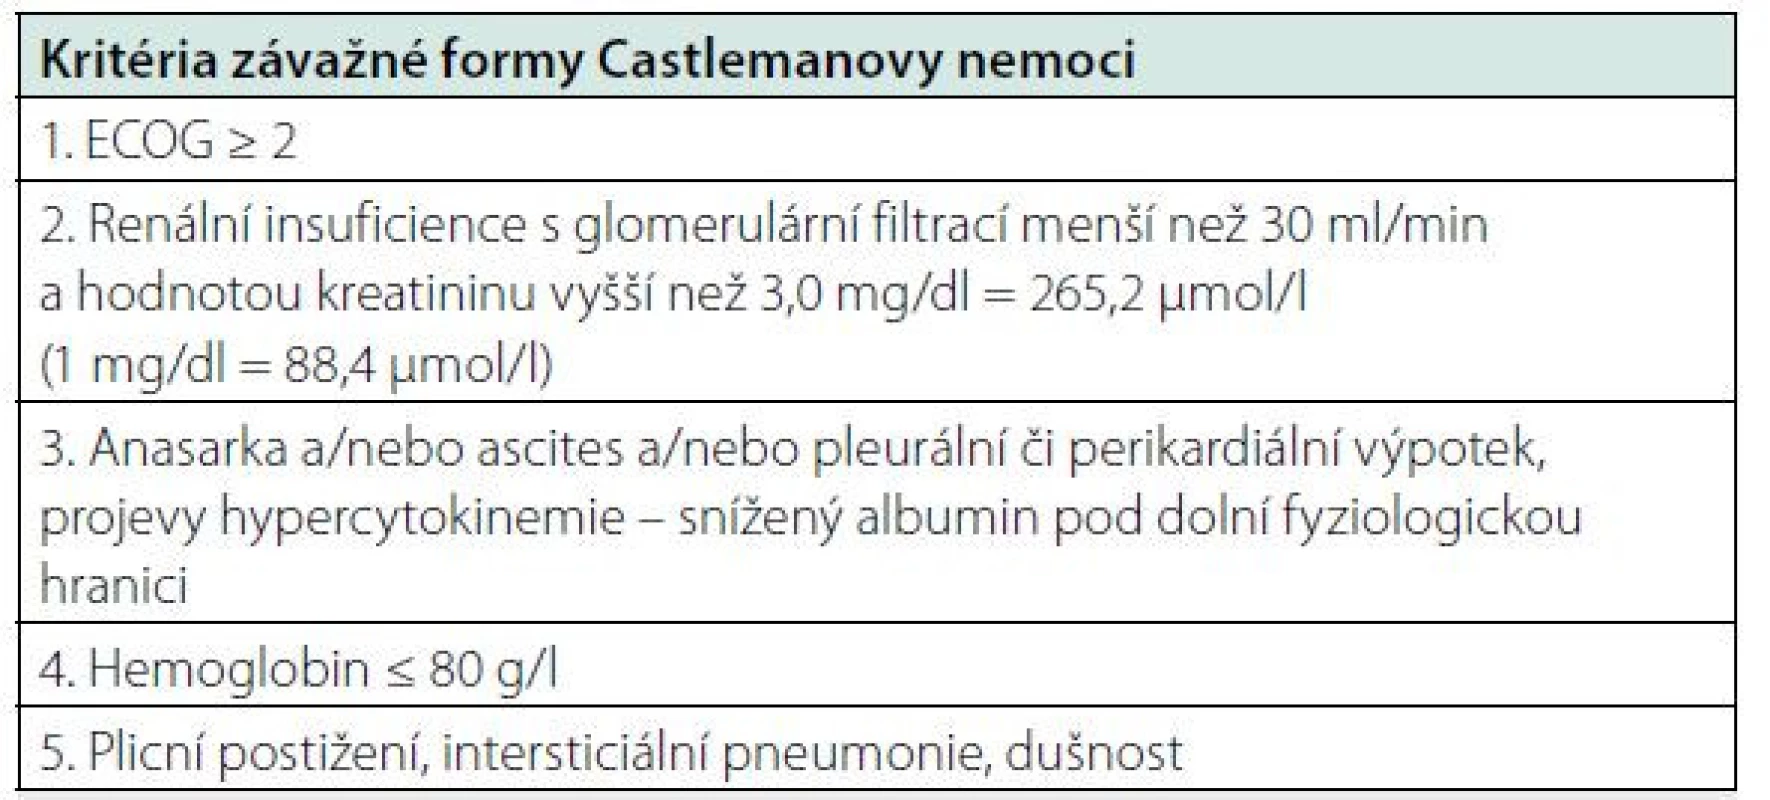 Kritéria závažné formy Castlemanovy nemoci dle „International, kinu-6. Tocilizumab je registrován pro léčbu idiopatické multicentrické
evidence based consensus treatment guidelines for idiopathic multicentric
Castleman disease“ (31)